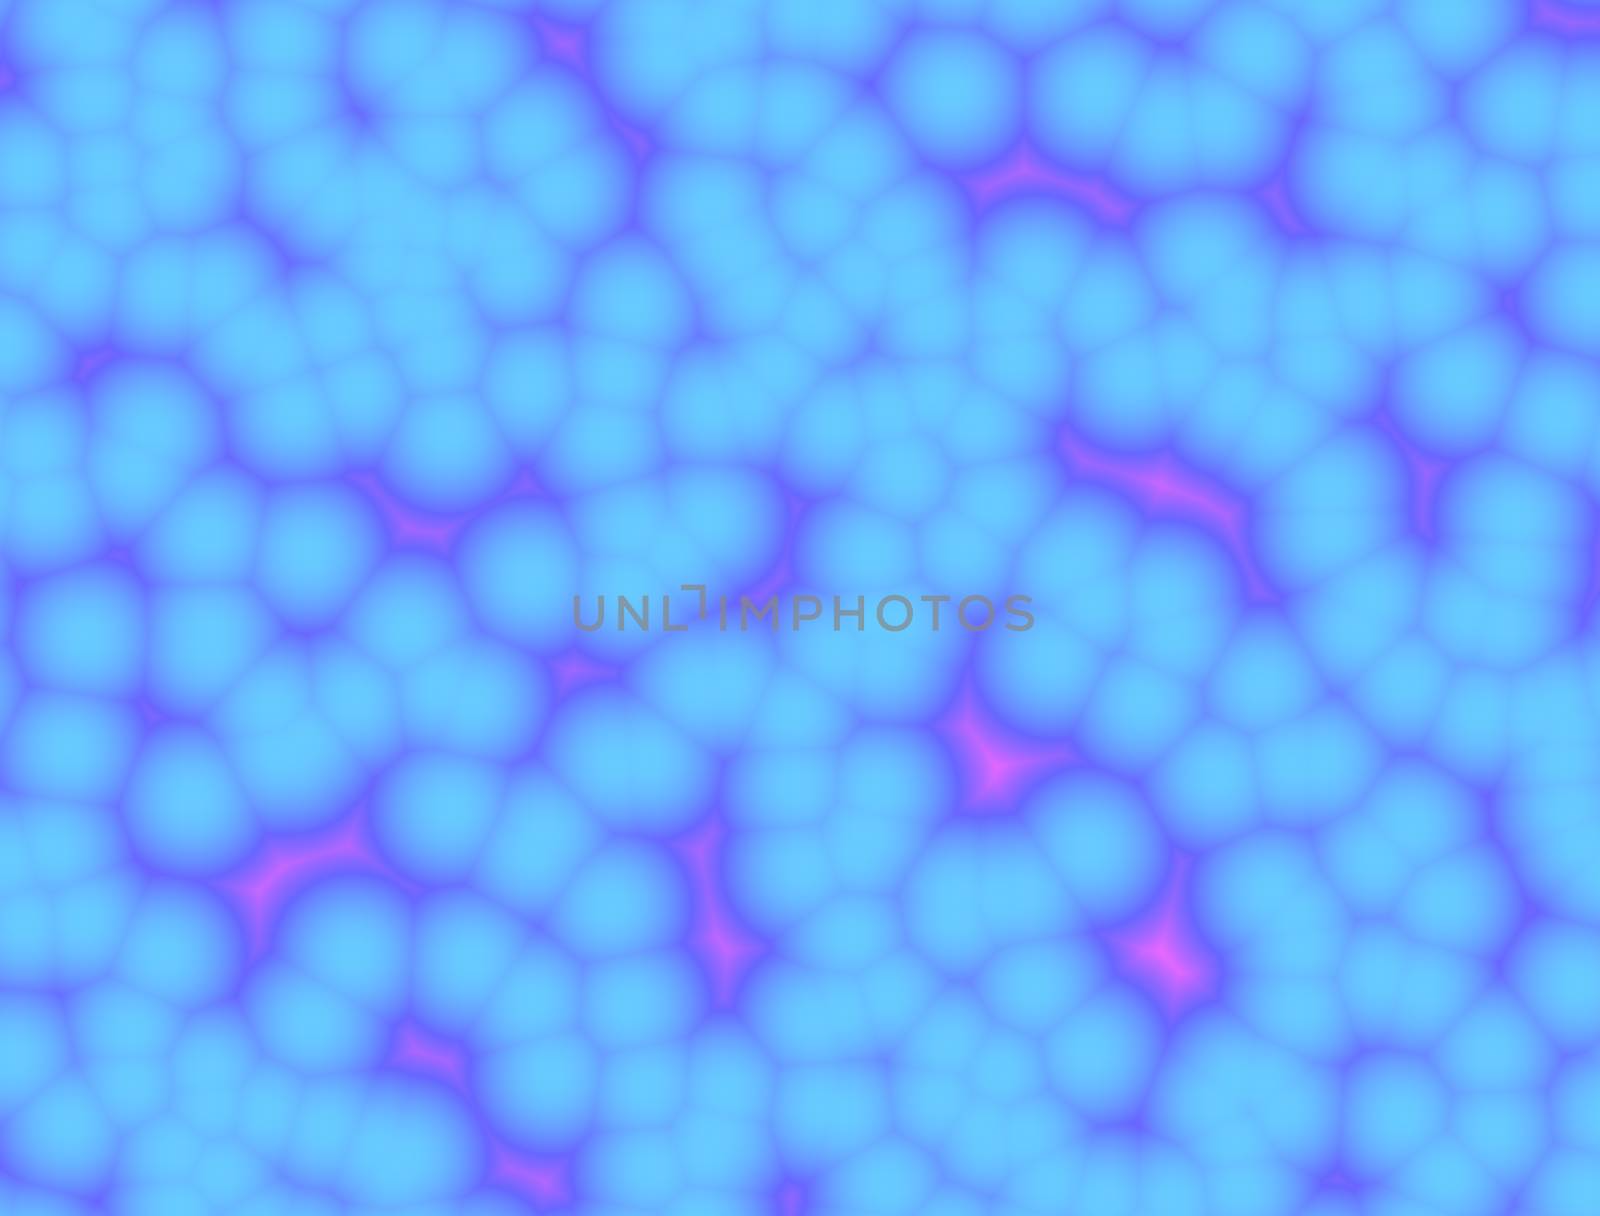 spots on blue background by sfinks